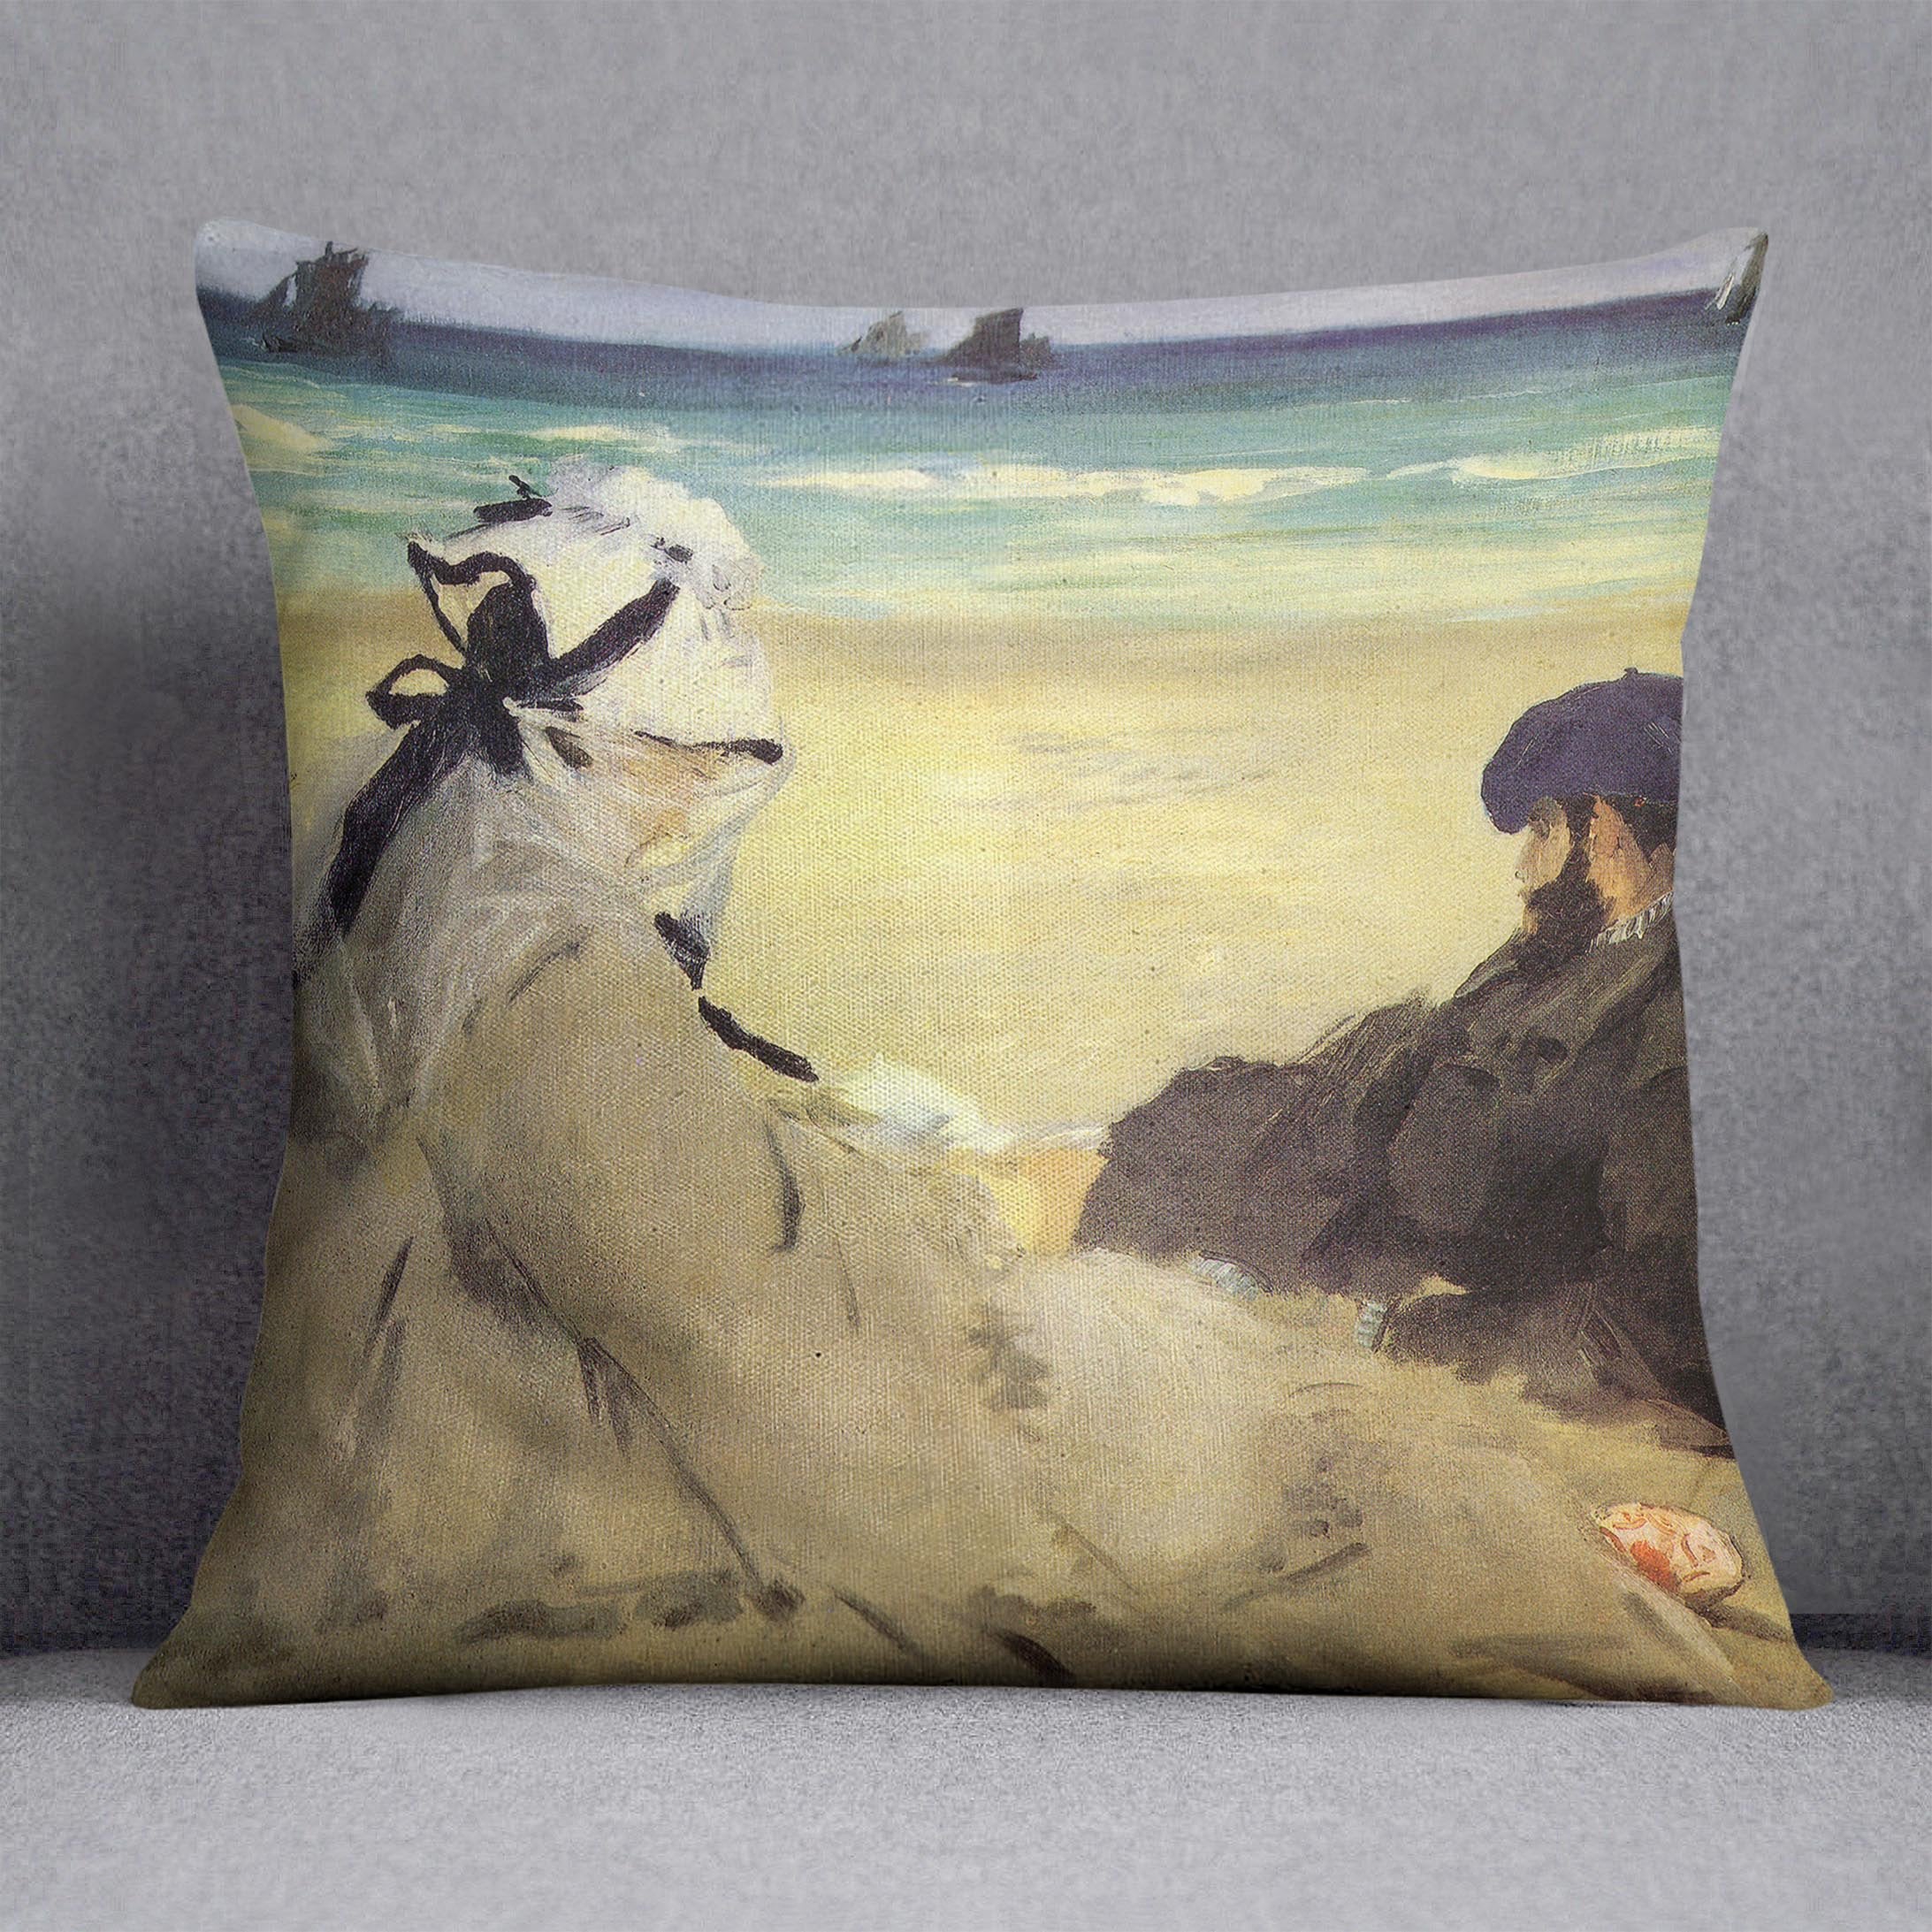 Sur la plage 1873 by Manet Throw Pillow